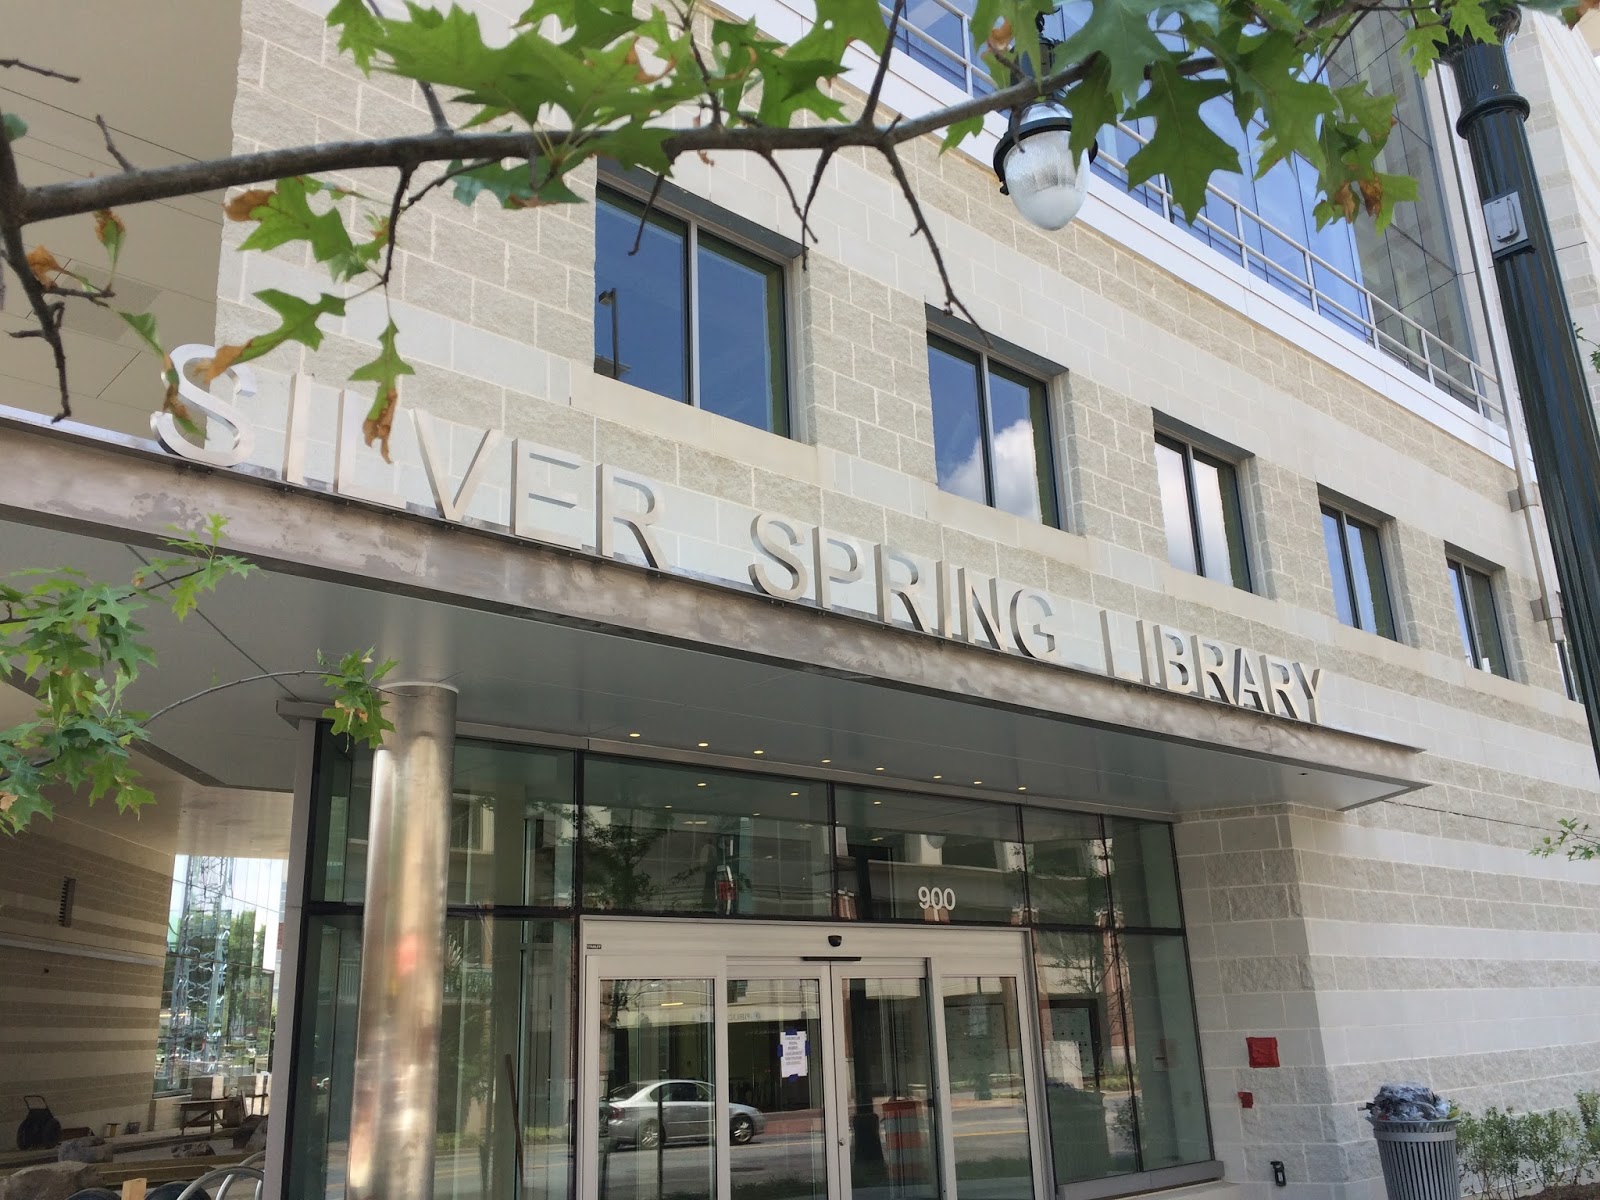 silver spring library wayne entrance 1 june 6 2015.JPG